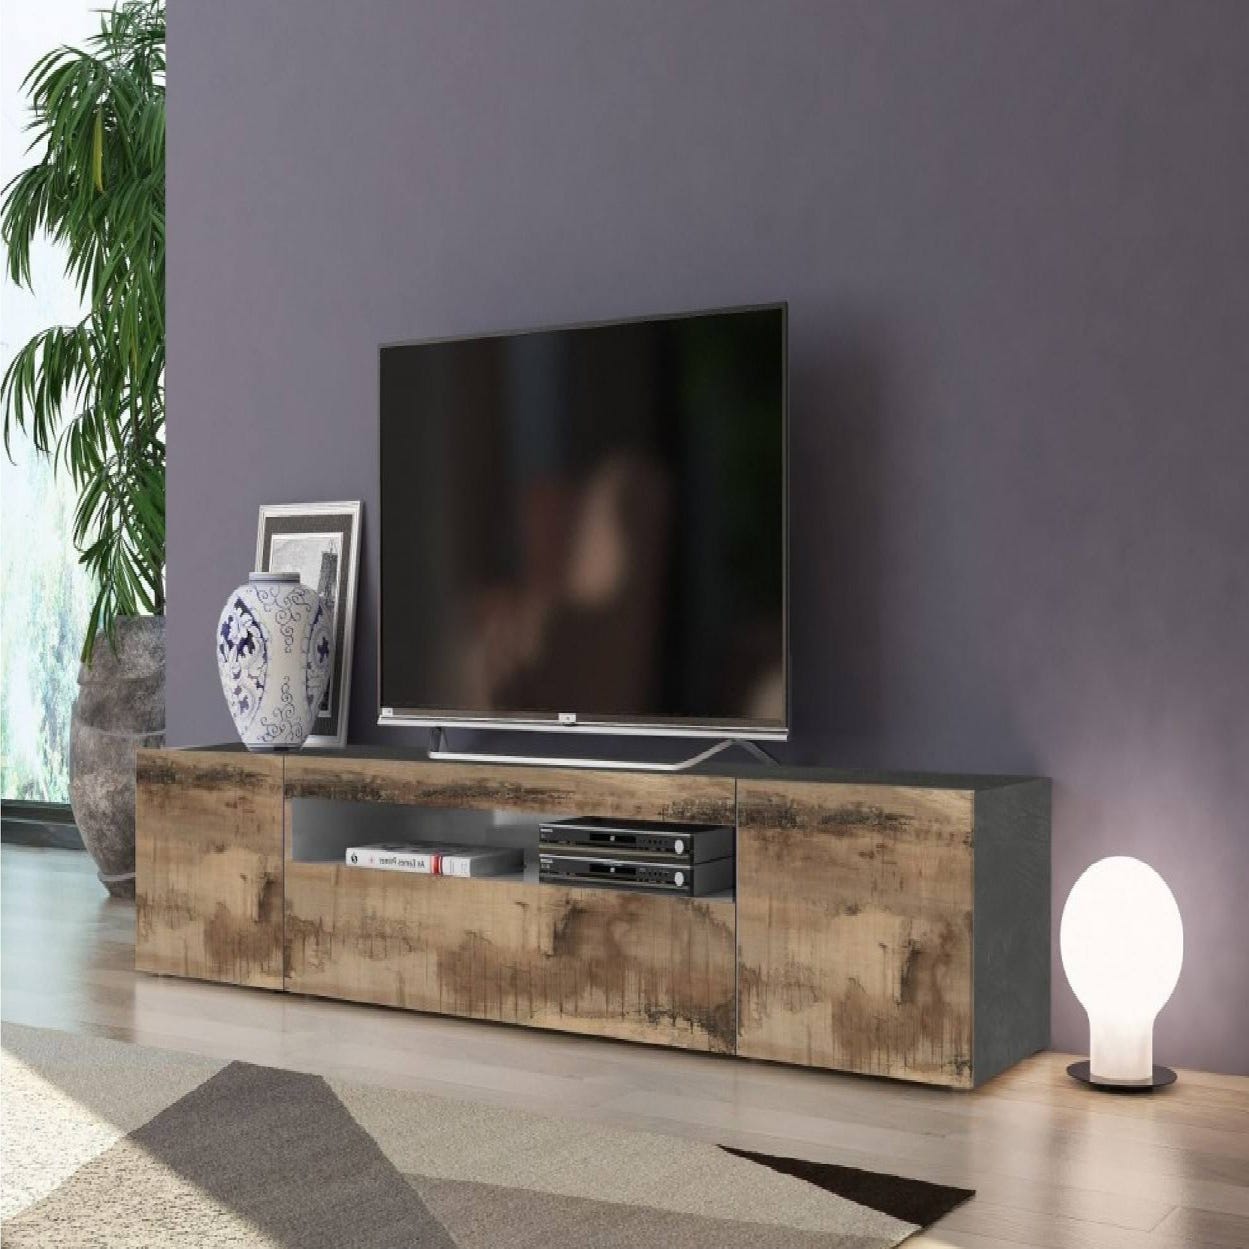 Mueble TV de estilo minimalista DS143TV - Dstilo